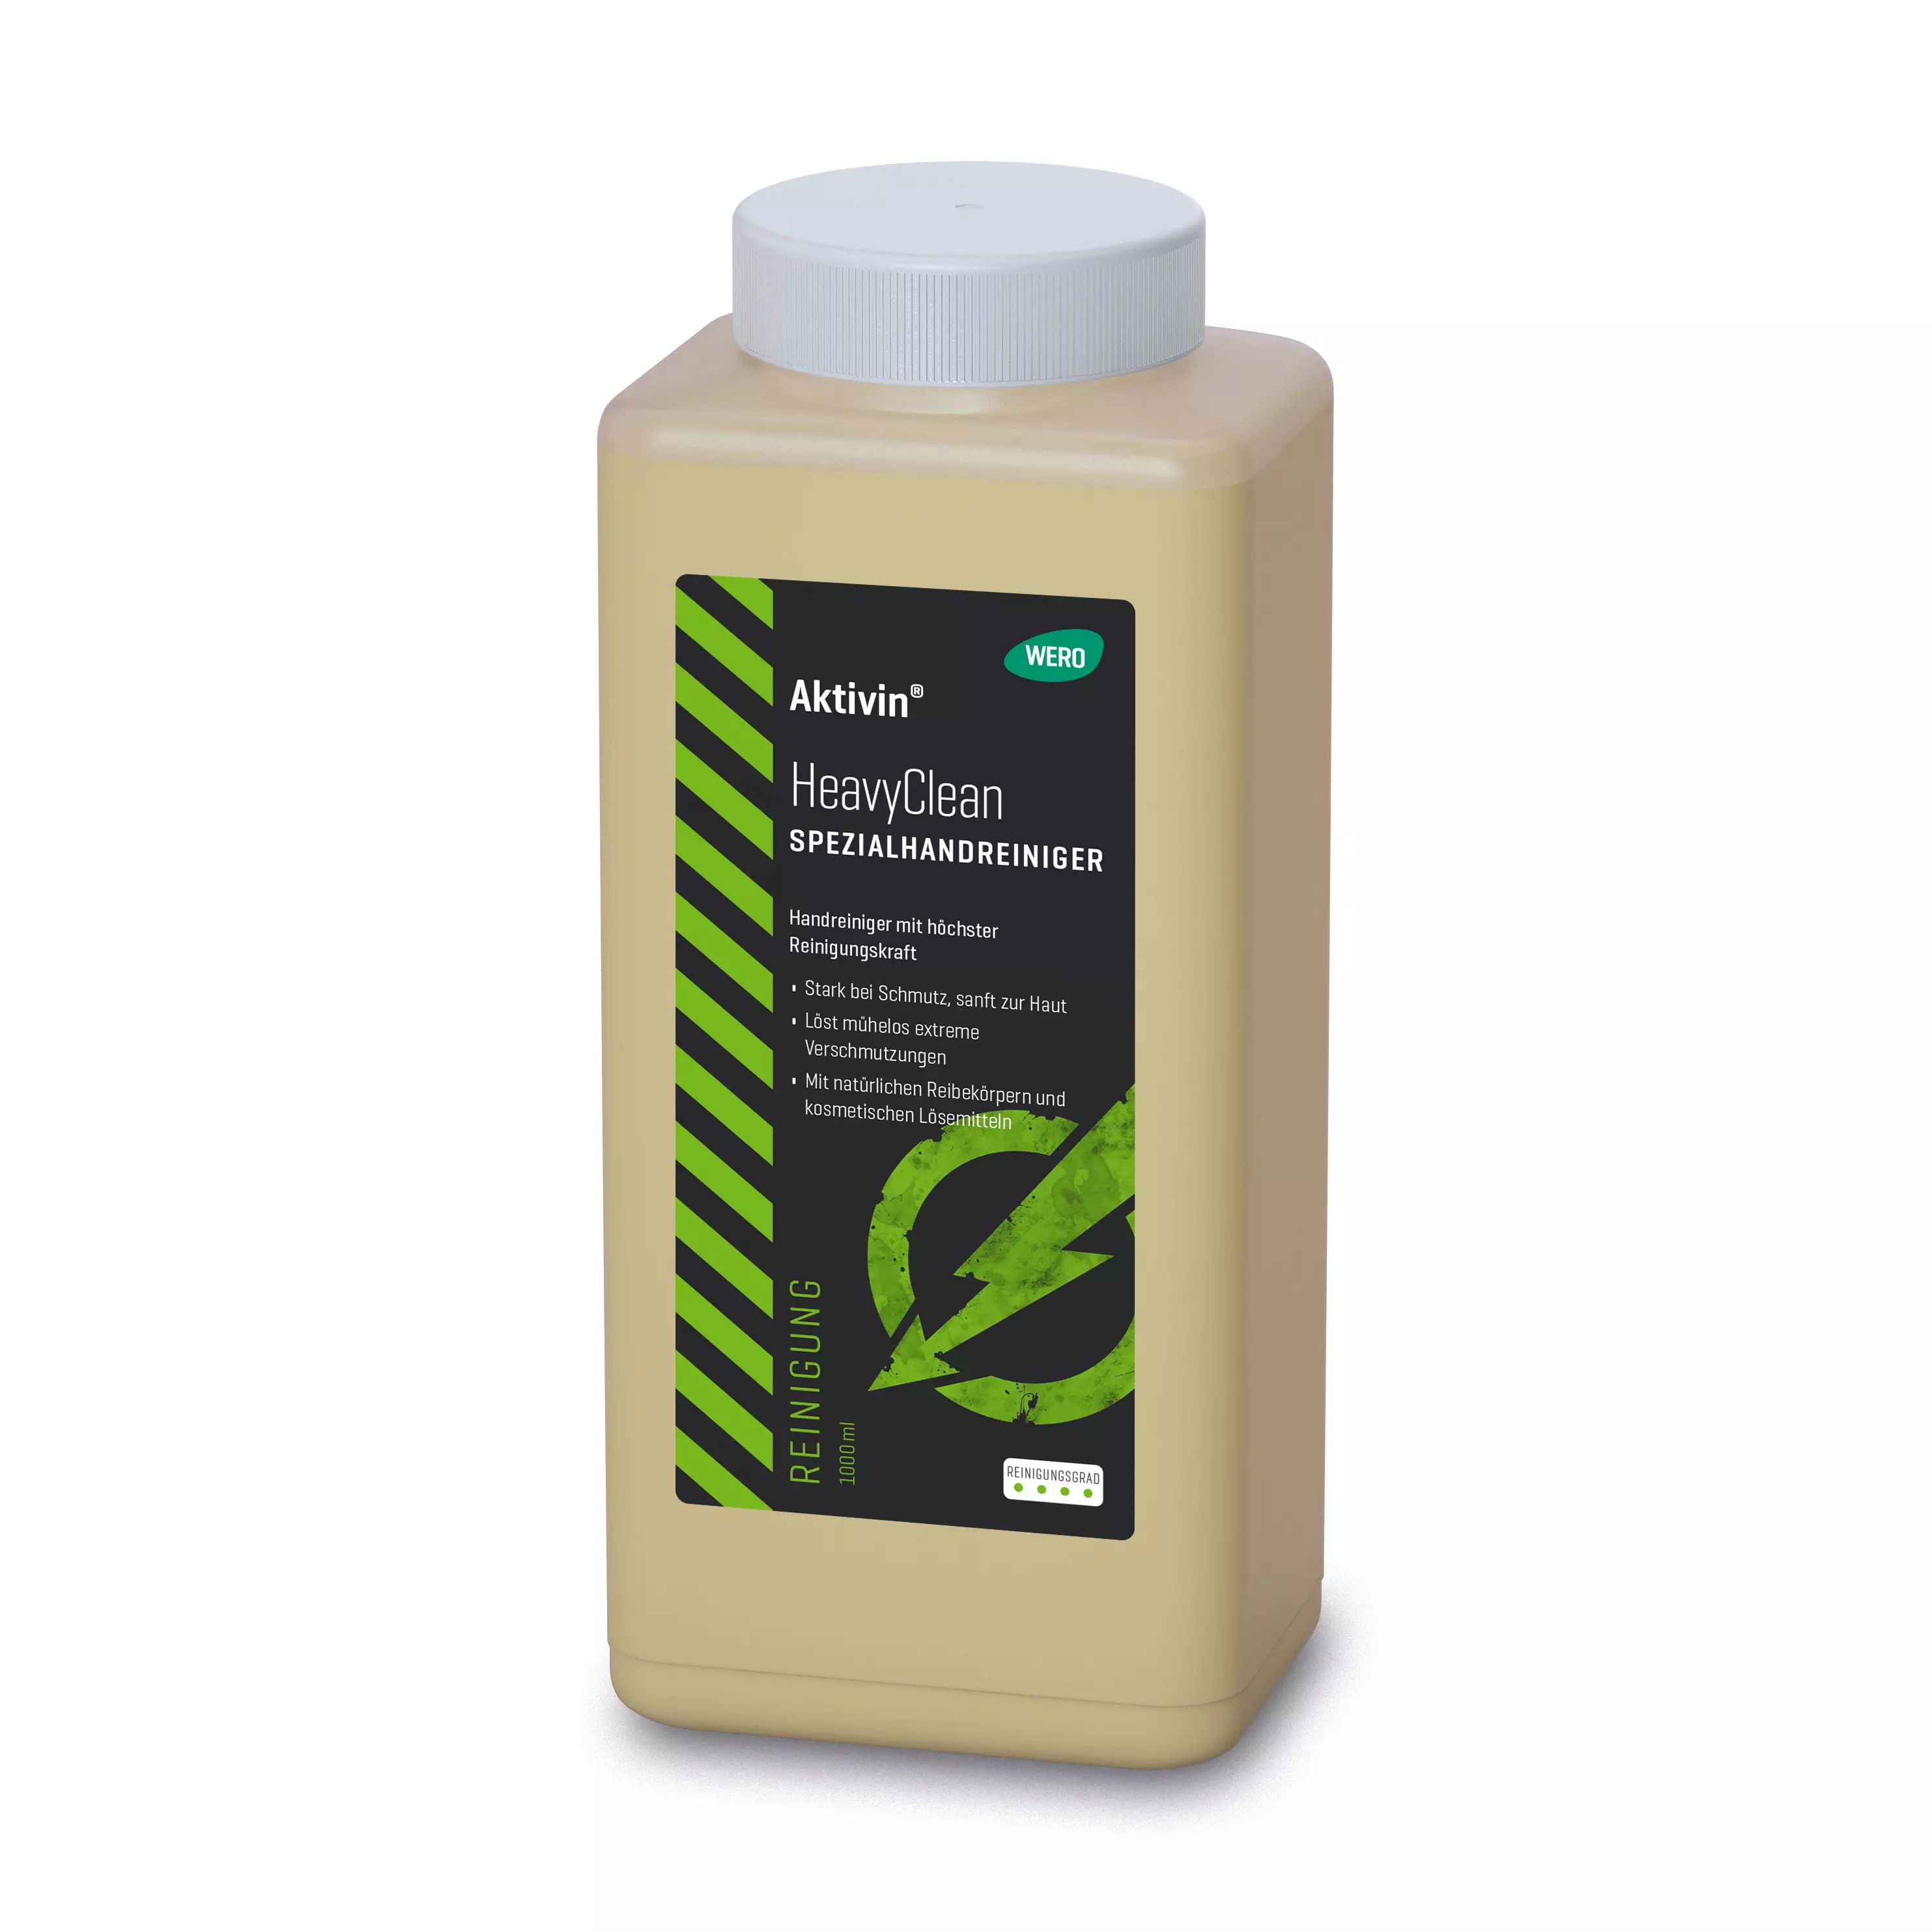 Special hand cleaner Aktivin® HeavyClean - Euro bottle, 1,000 ml